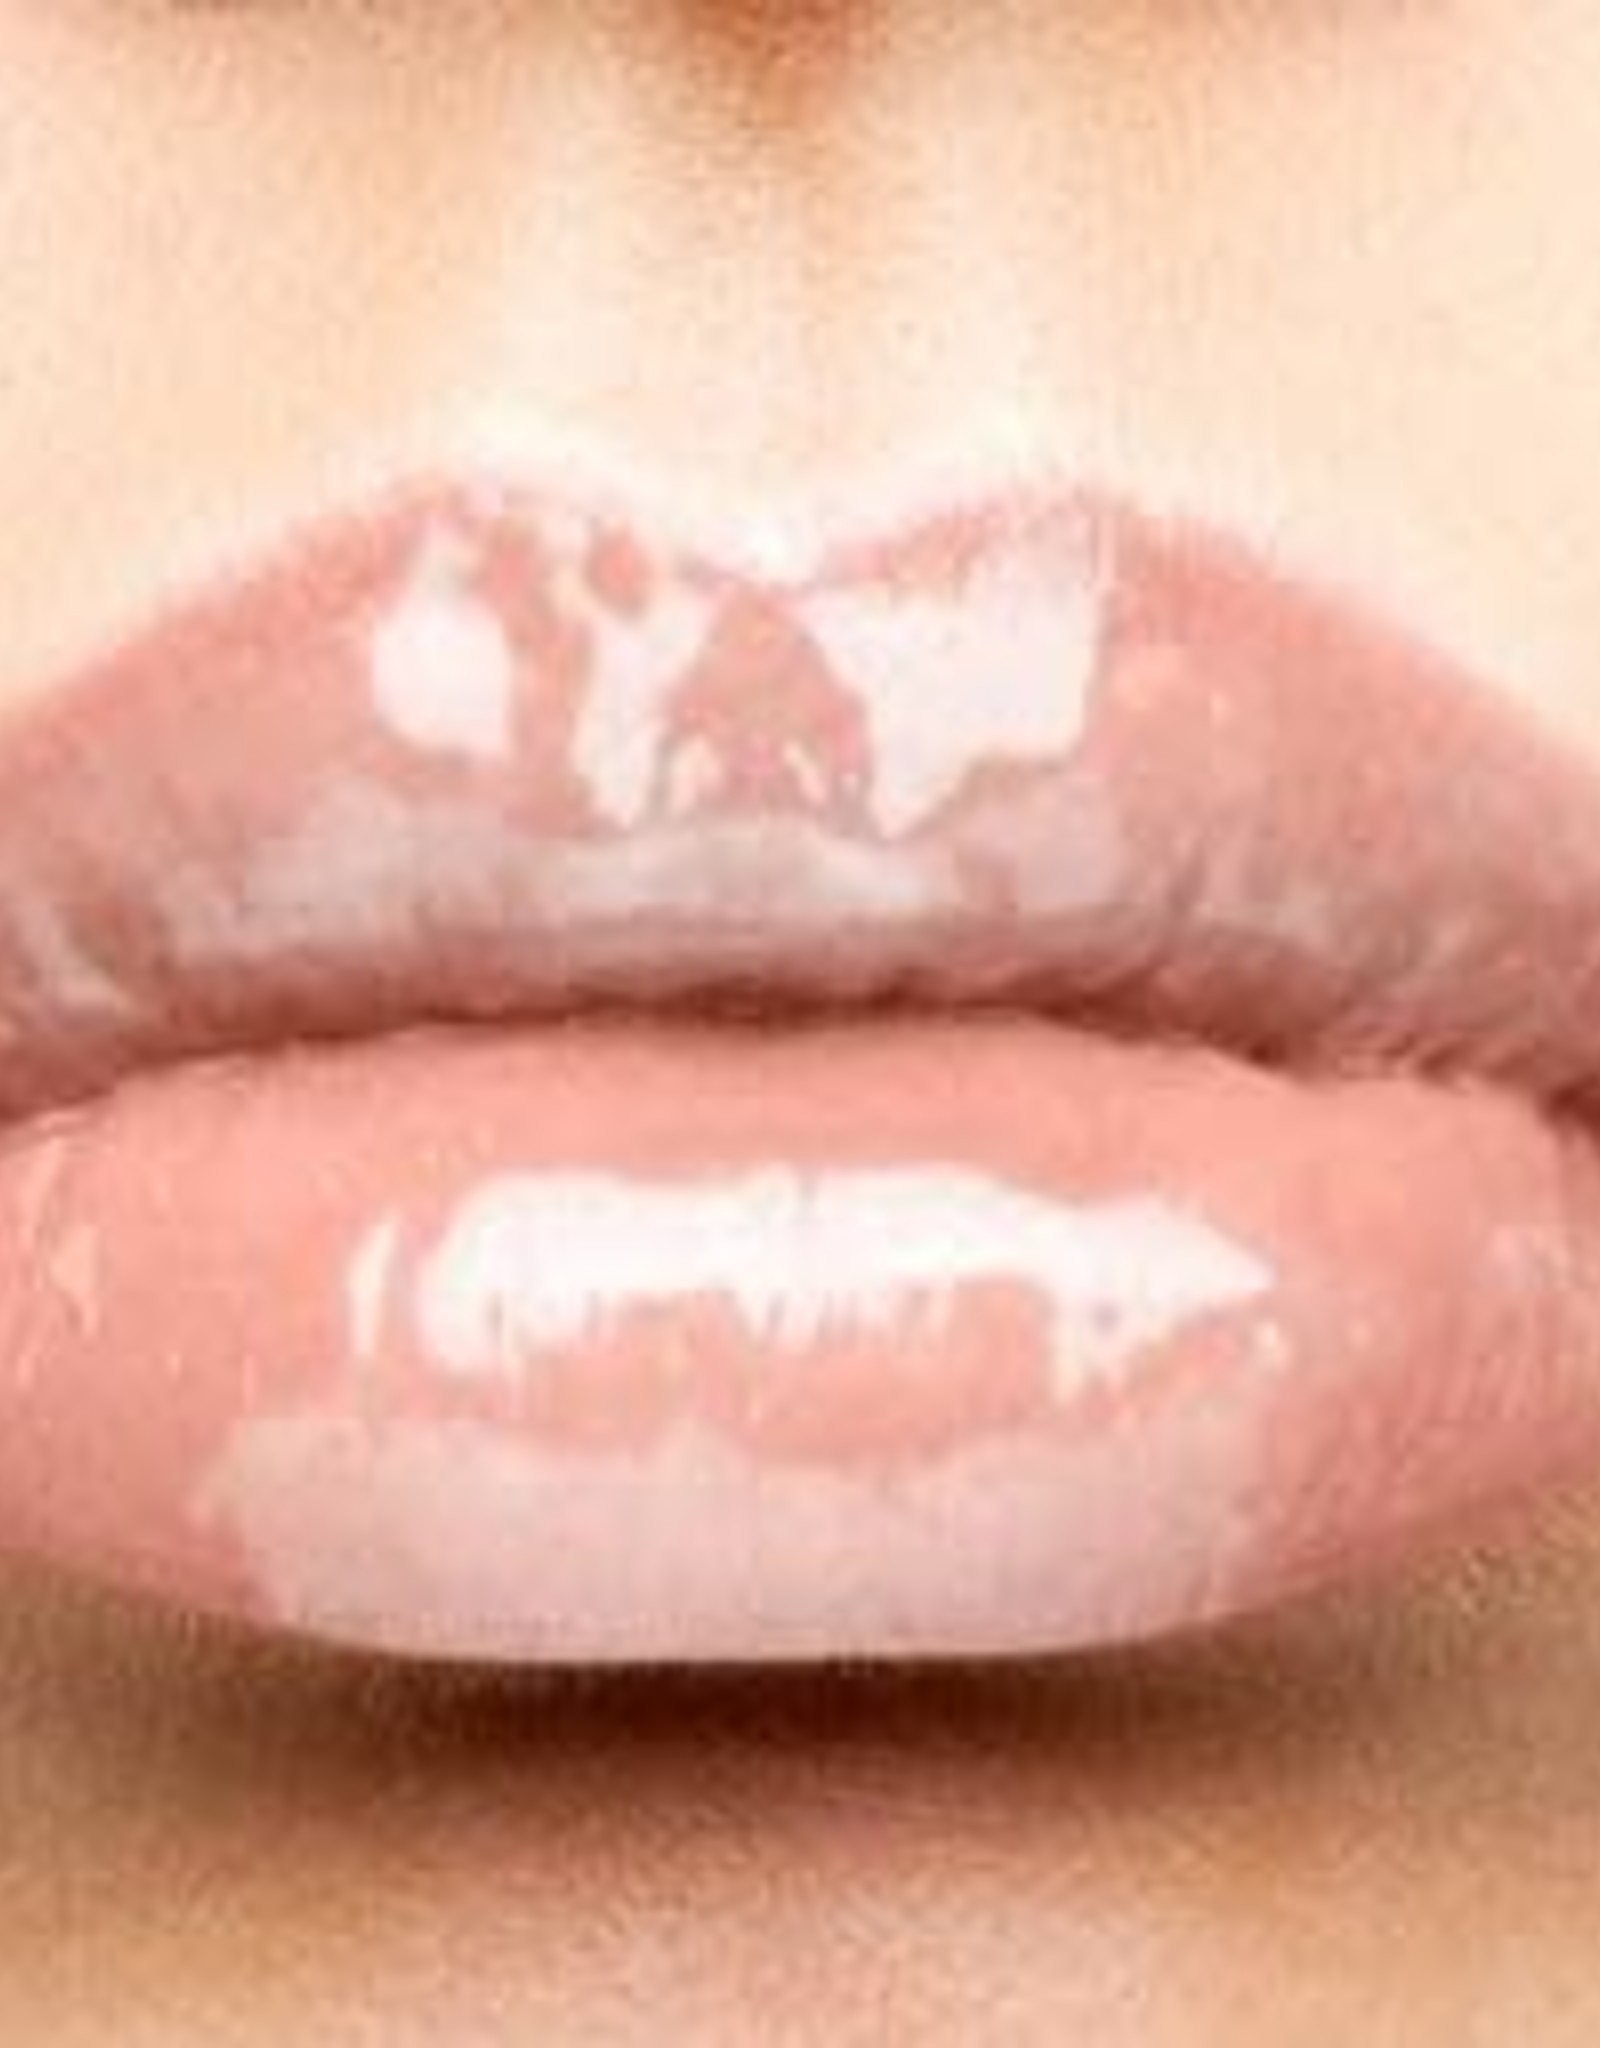 Tinte Cosmetics Rollerball Lip Potion - Cinnamon